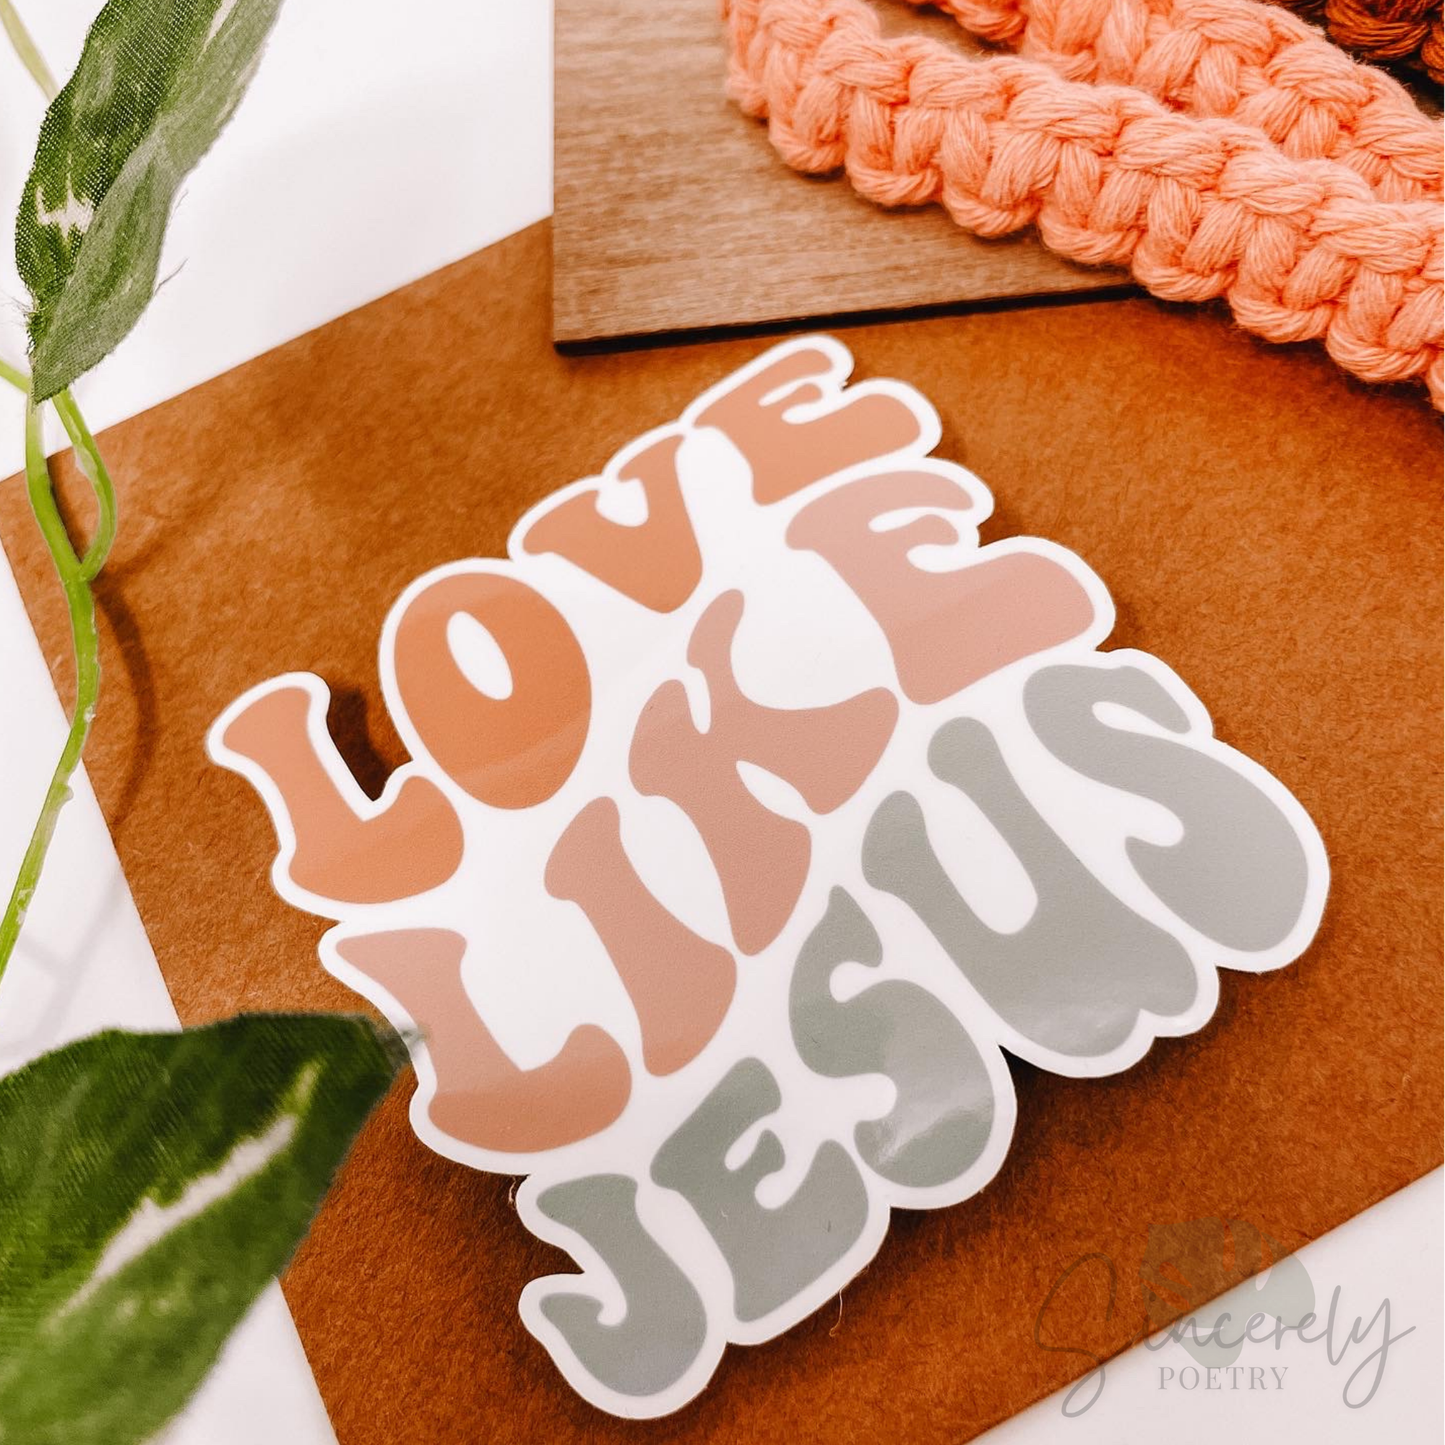 Vinyl Sticker - Love like Jesus